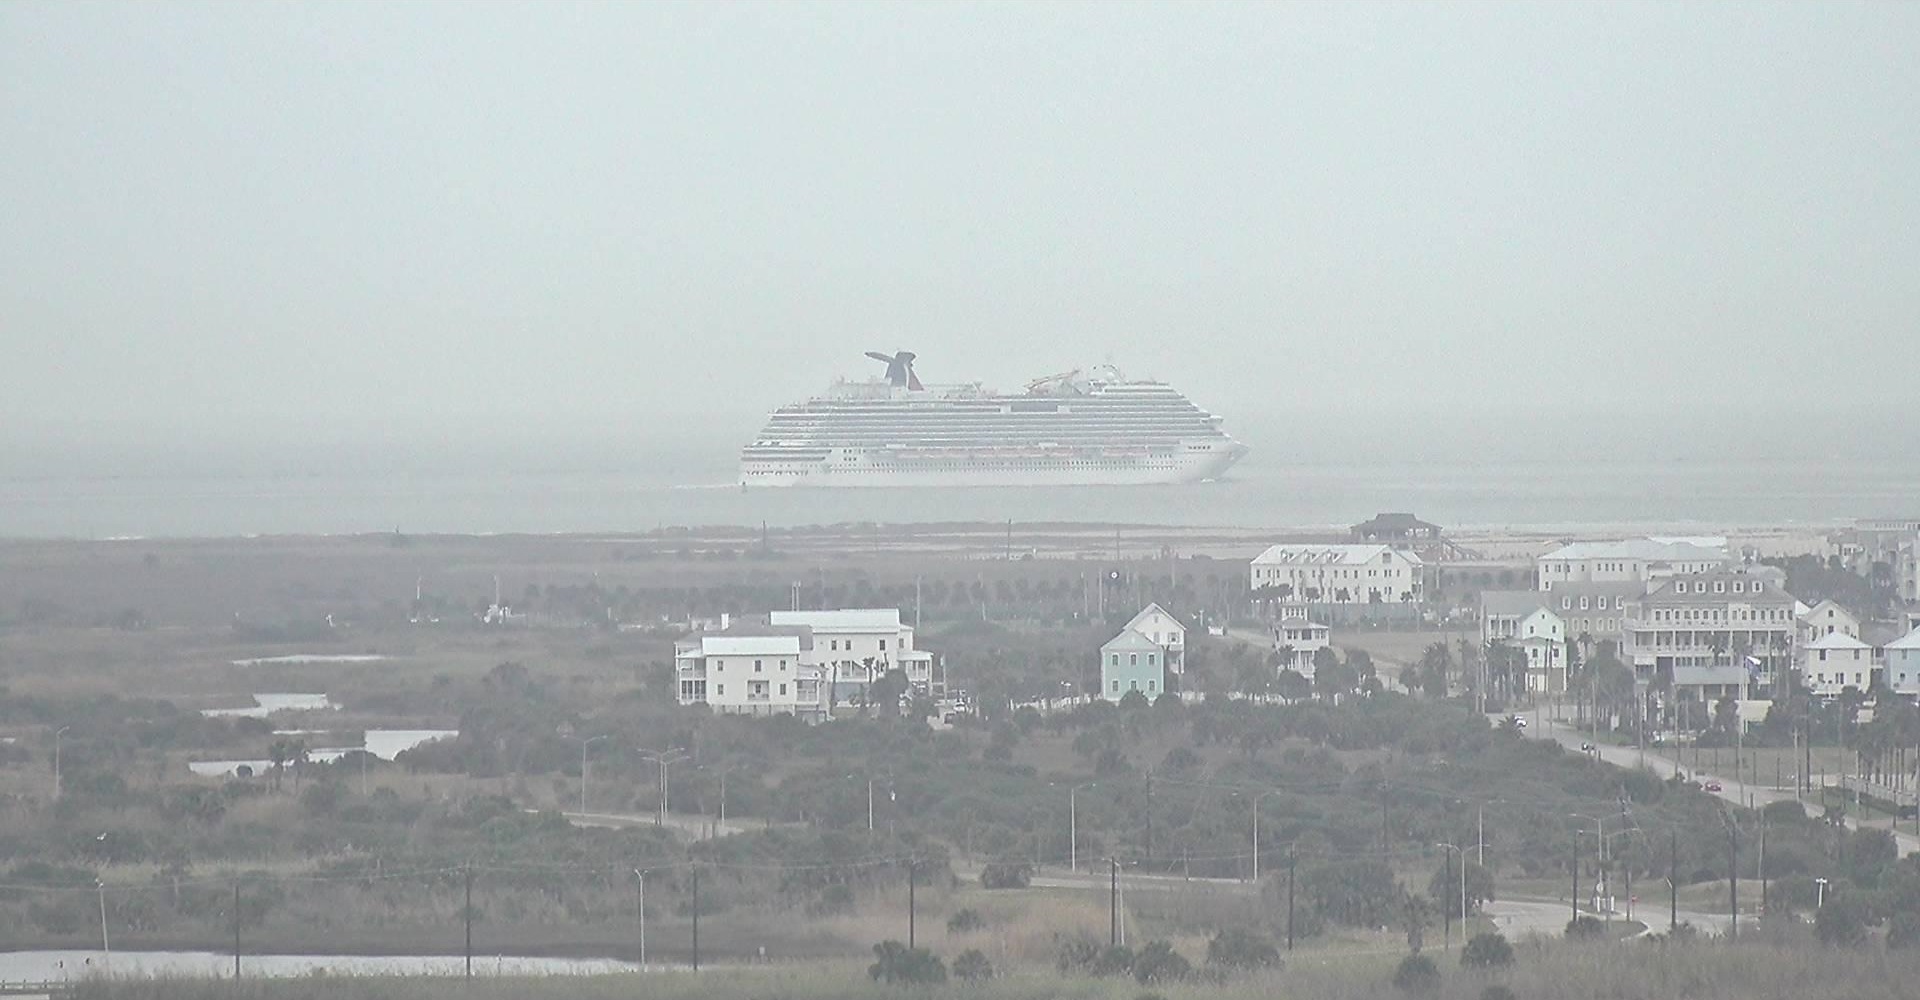 Port of Galveston Cruise Terminals, Galveston, Texas Webcam / Camera